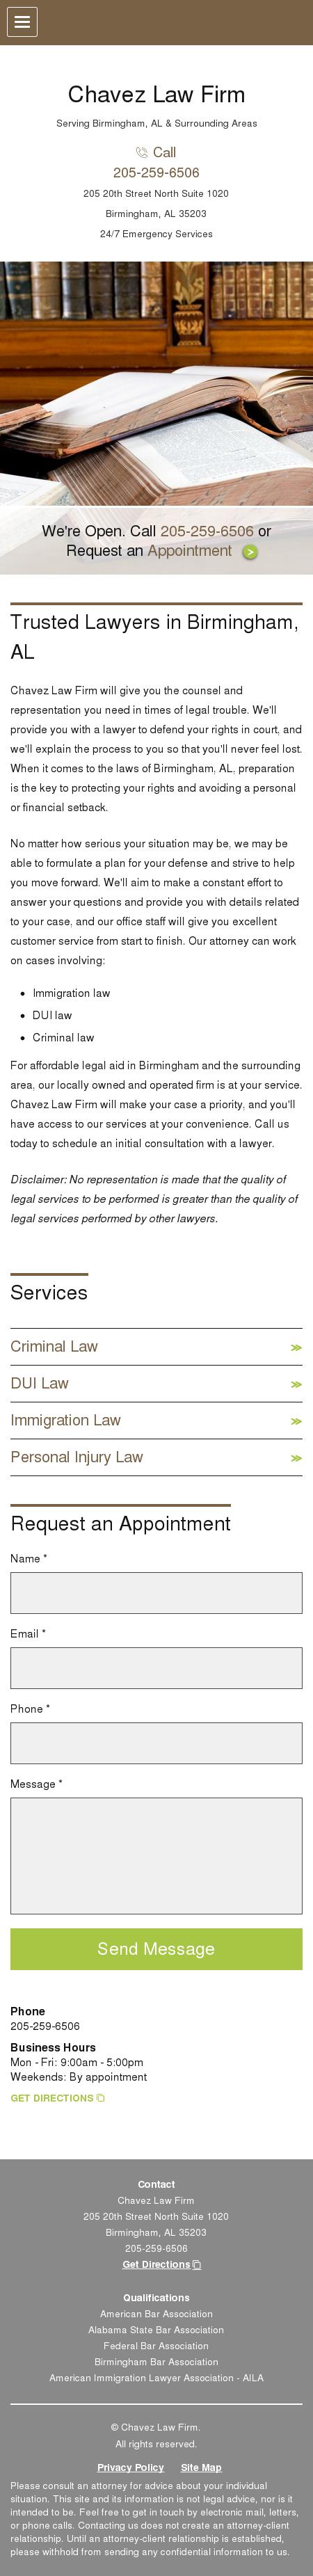 Cain Law Firm - Birmingham AL Lawyers